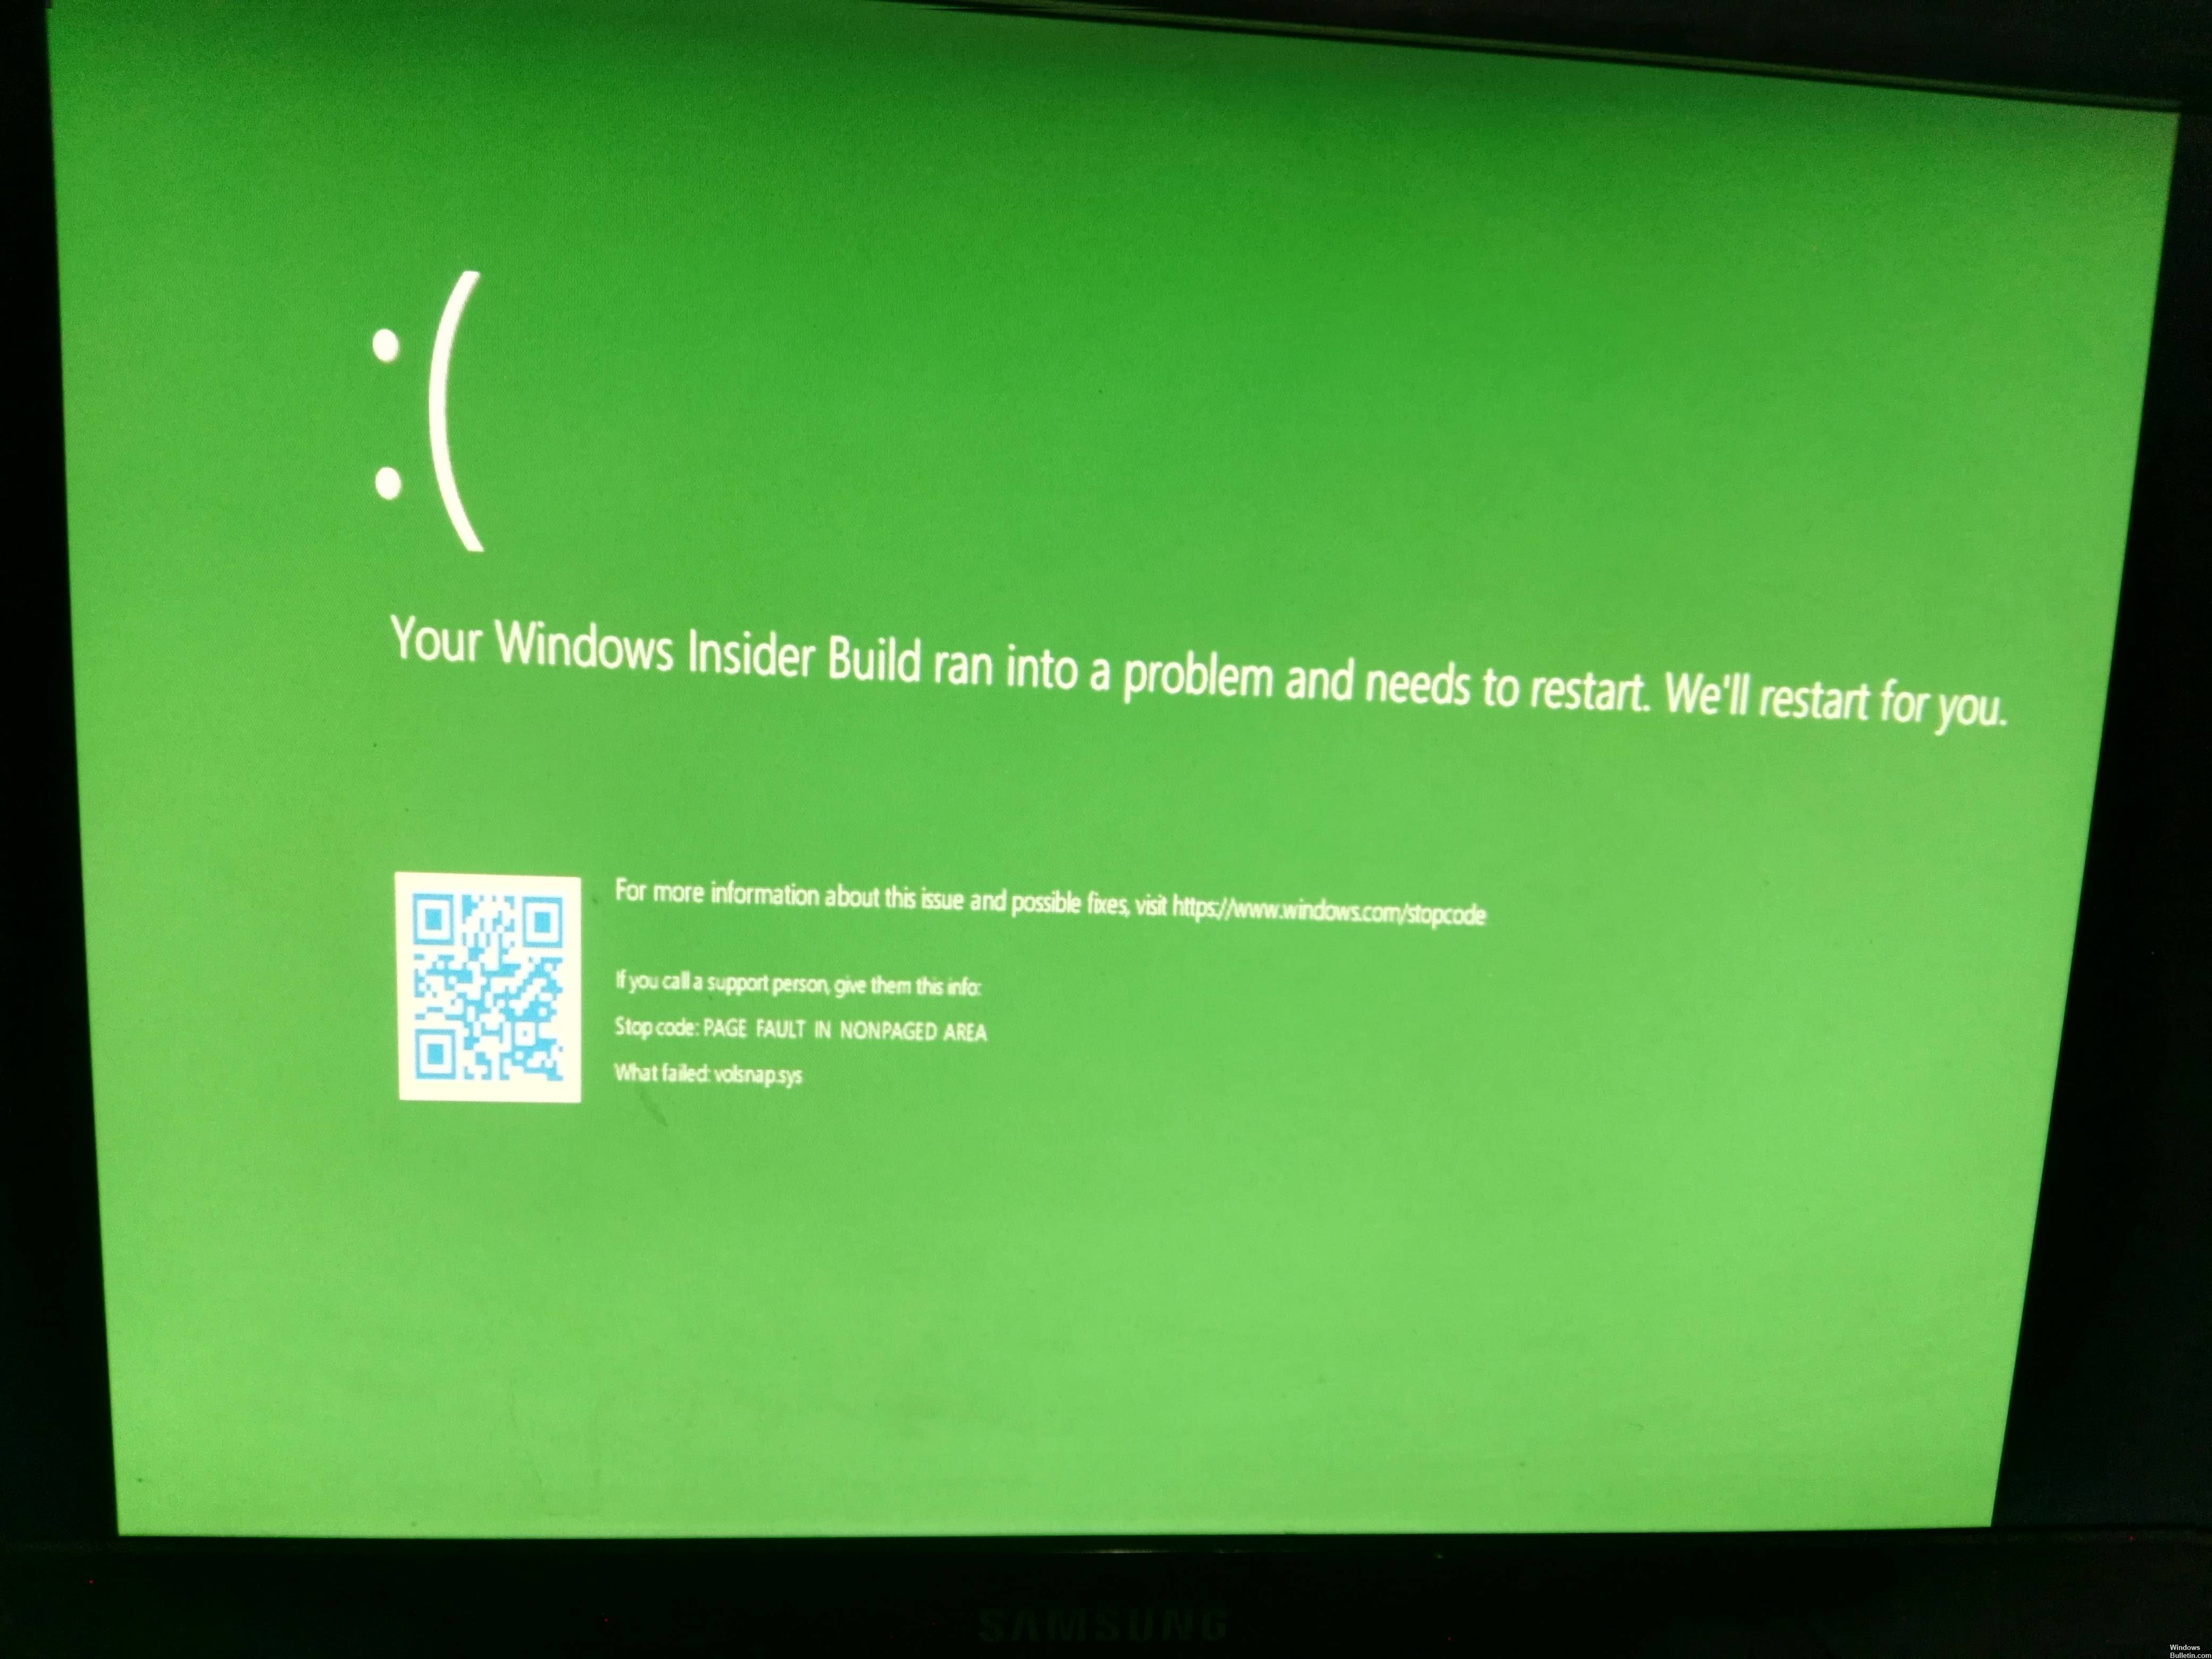 Синий экран смерти Windows. Page Fault in NONPAGED area Windows 10. Игра BSOD. Ошибка виндовс зеленый экран.